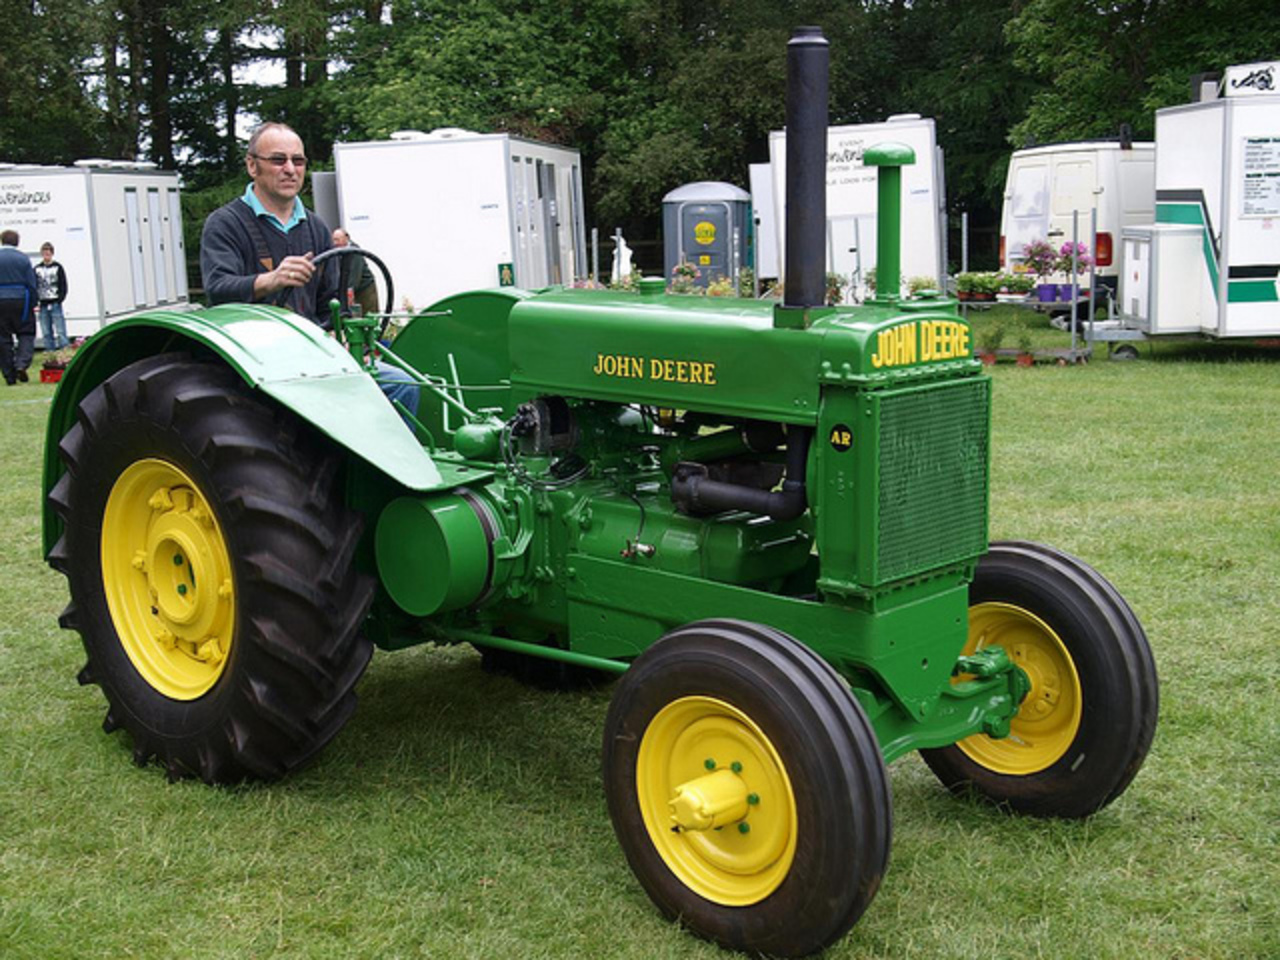 John Deere AR Farm Tractors | Flickr - Photo Sharing!